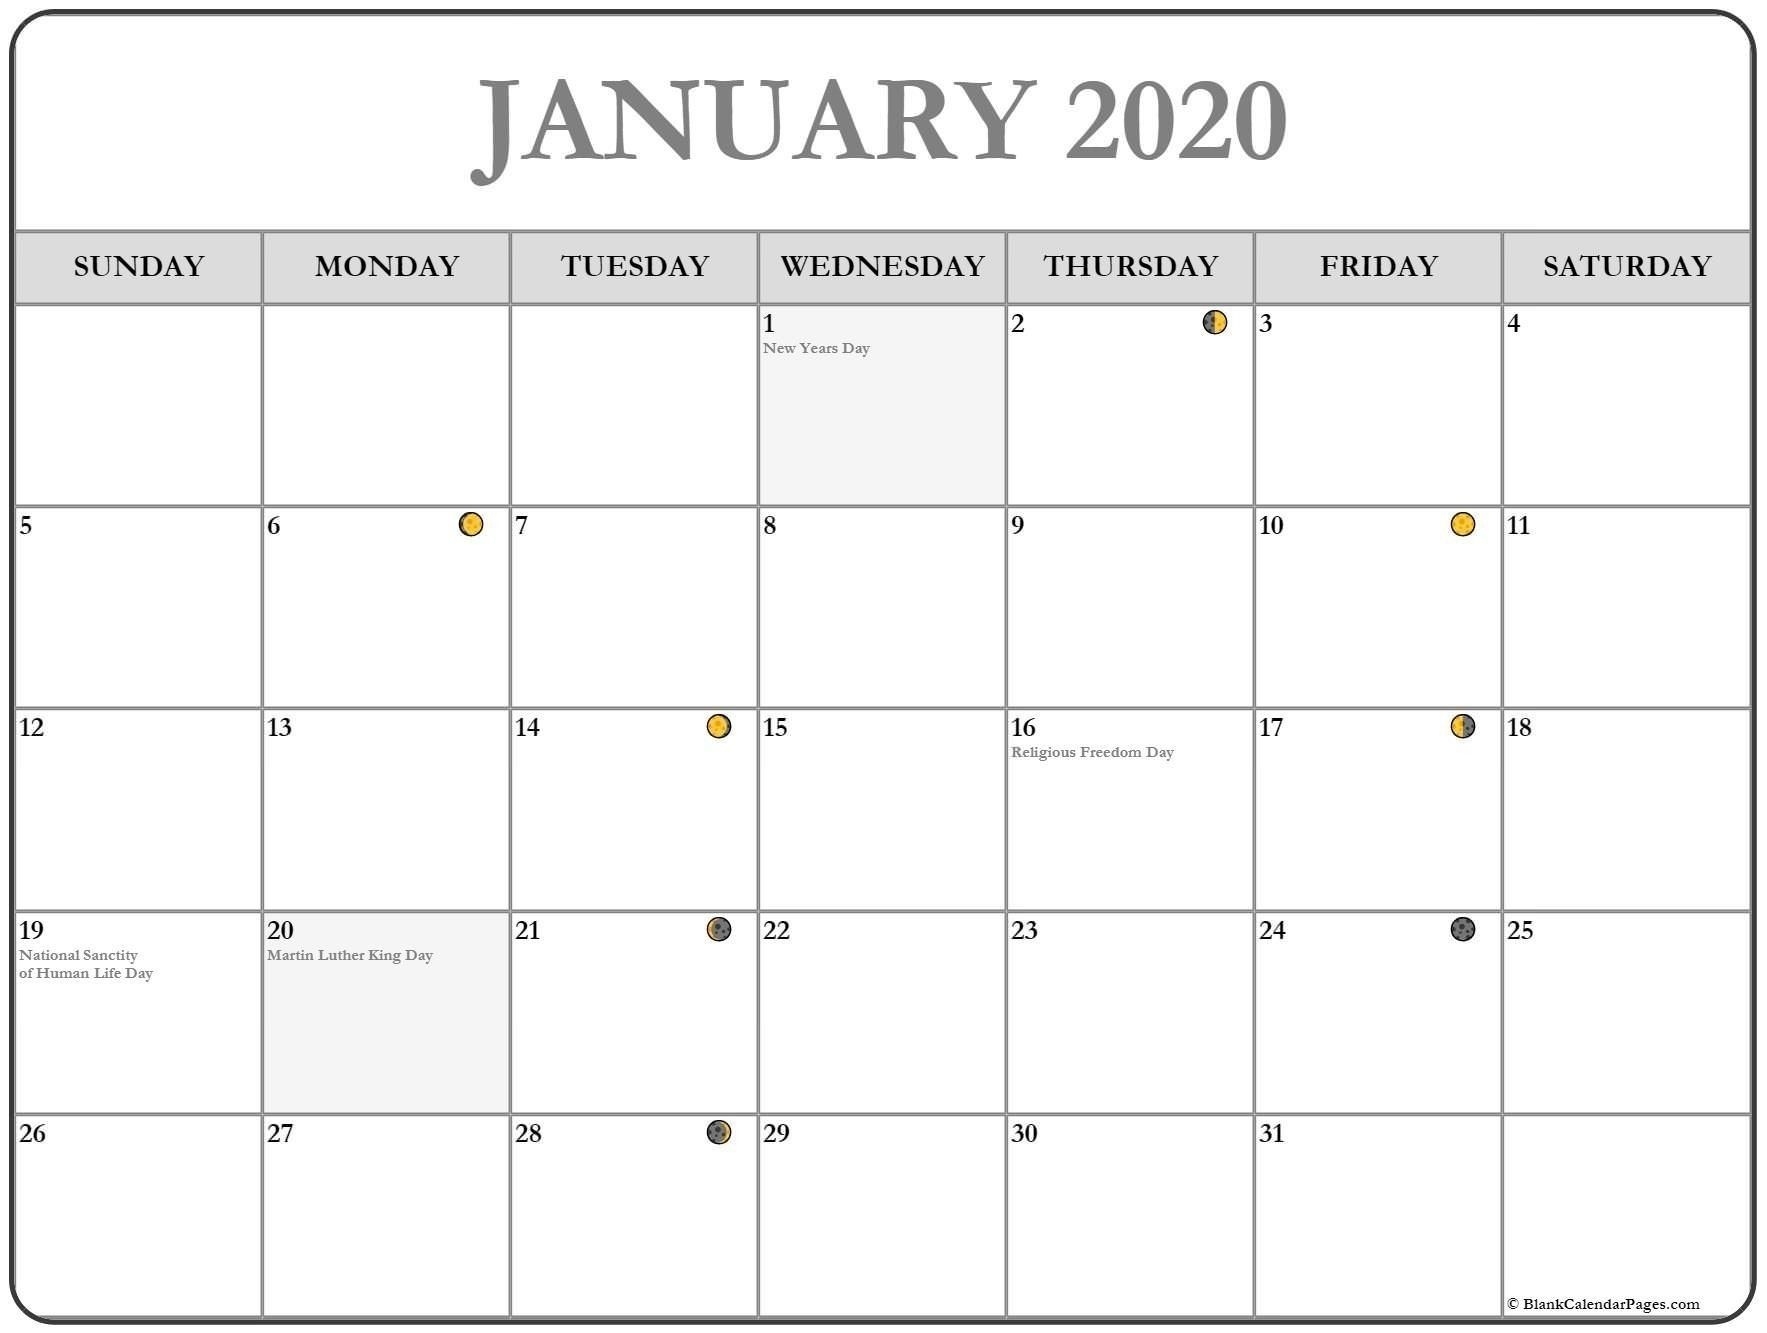 January 2020 Lunar Calendar | Monthly Calendar Template Printable Calendar 2020 Iwth Lunar Dates